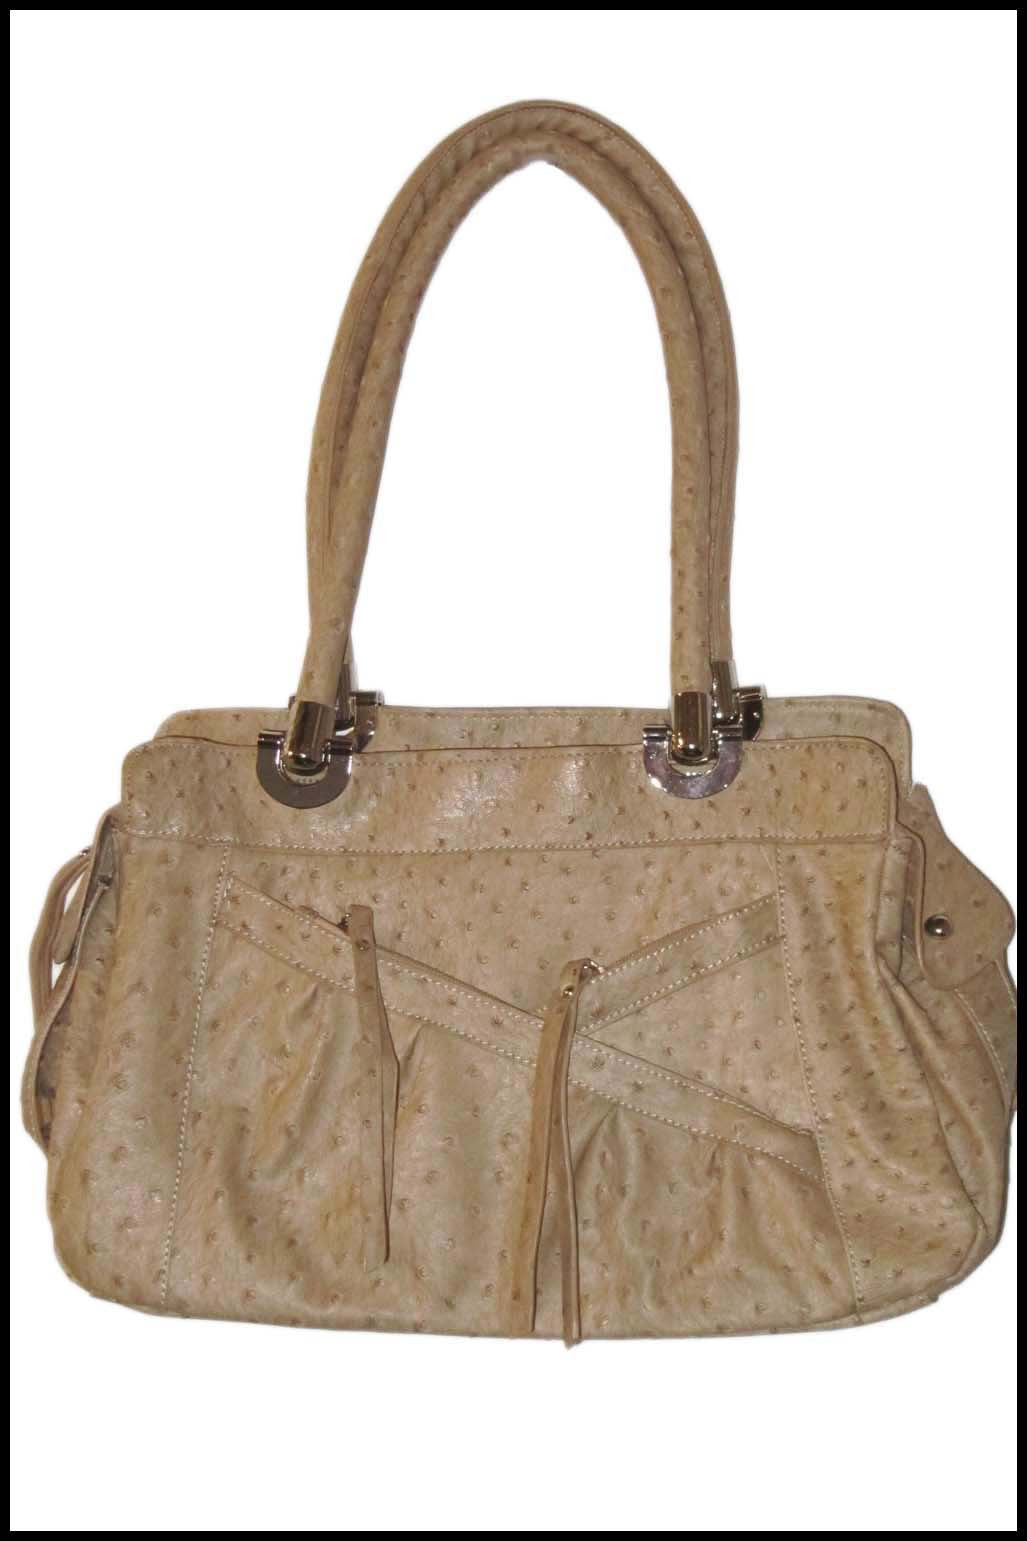 Ostrich Print Handbag with Multiple Pockets